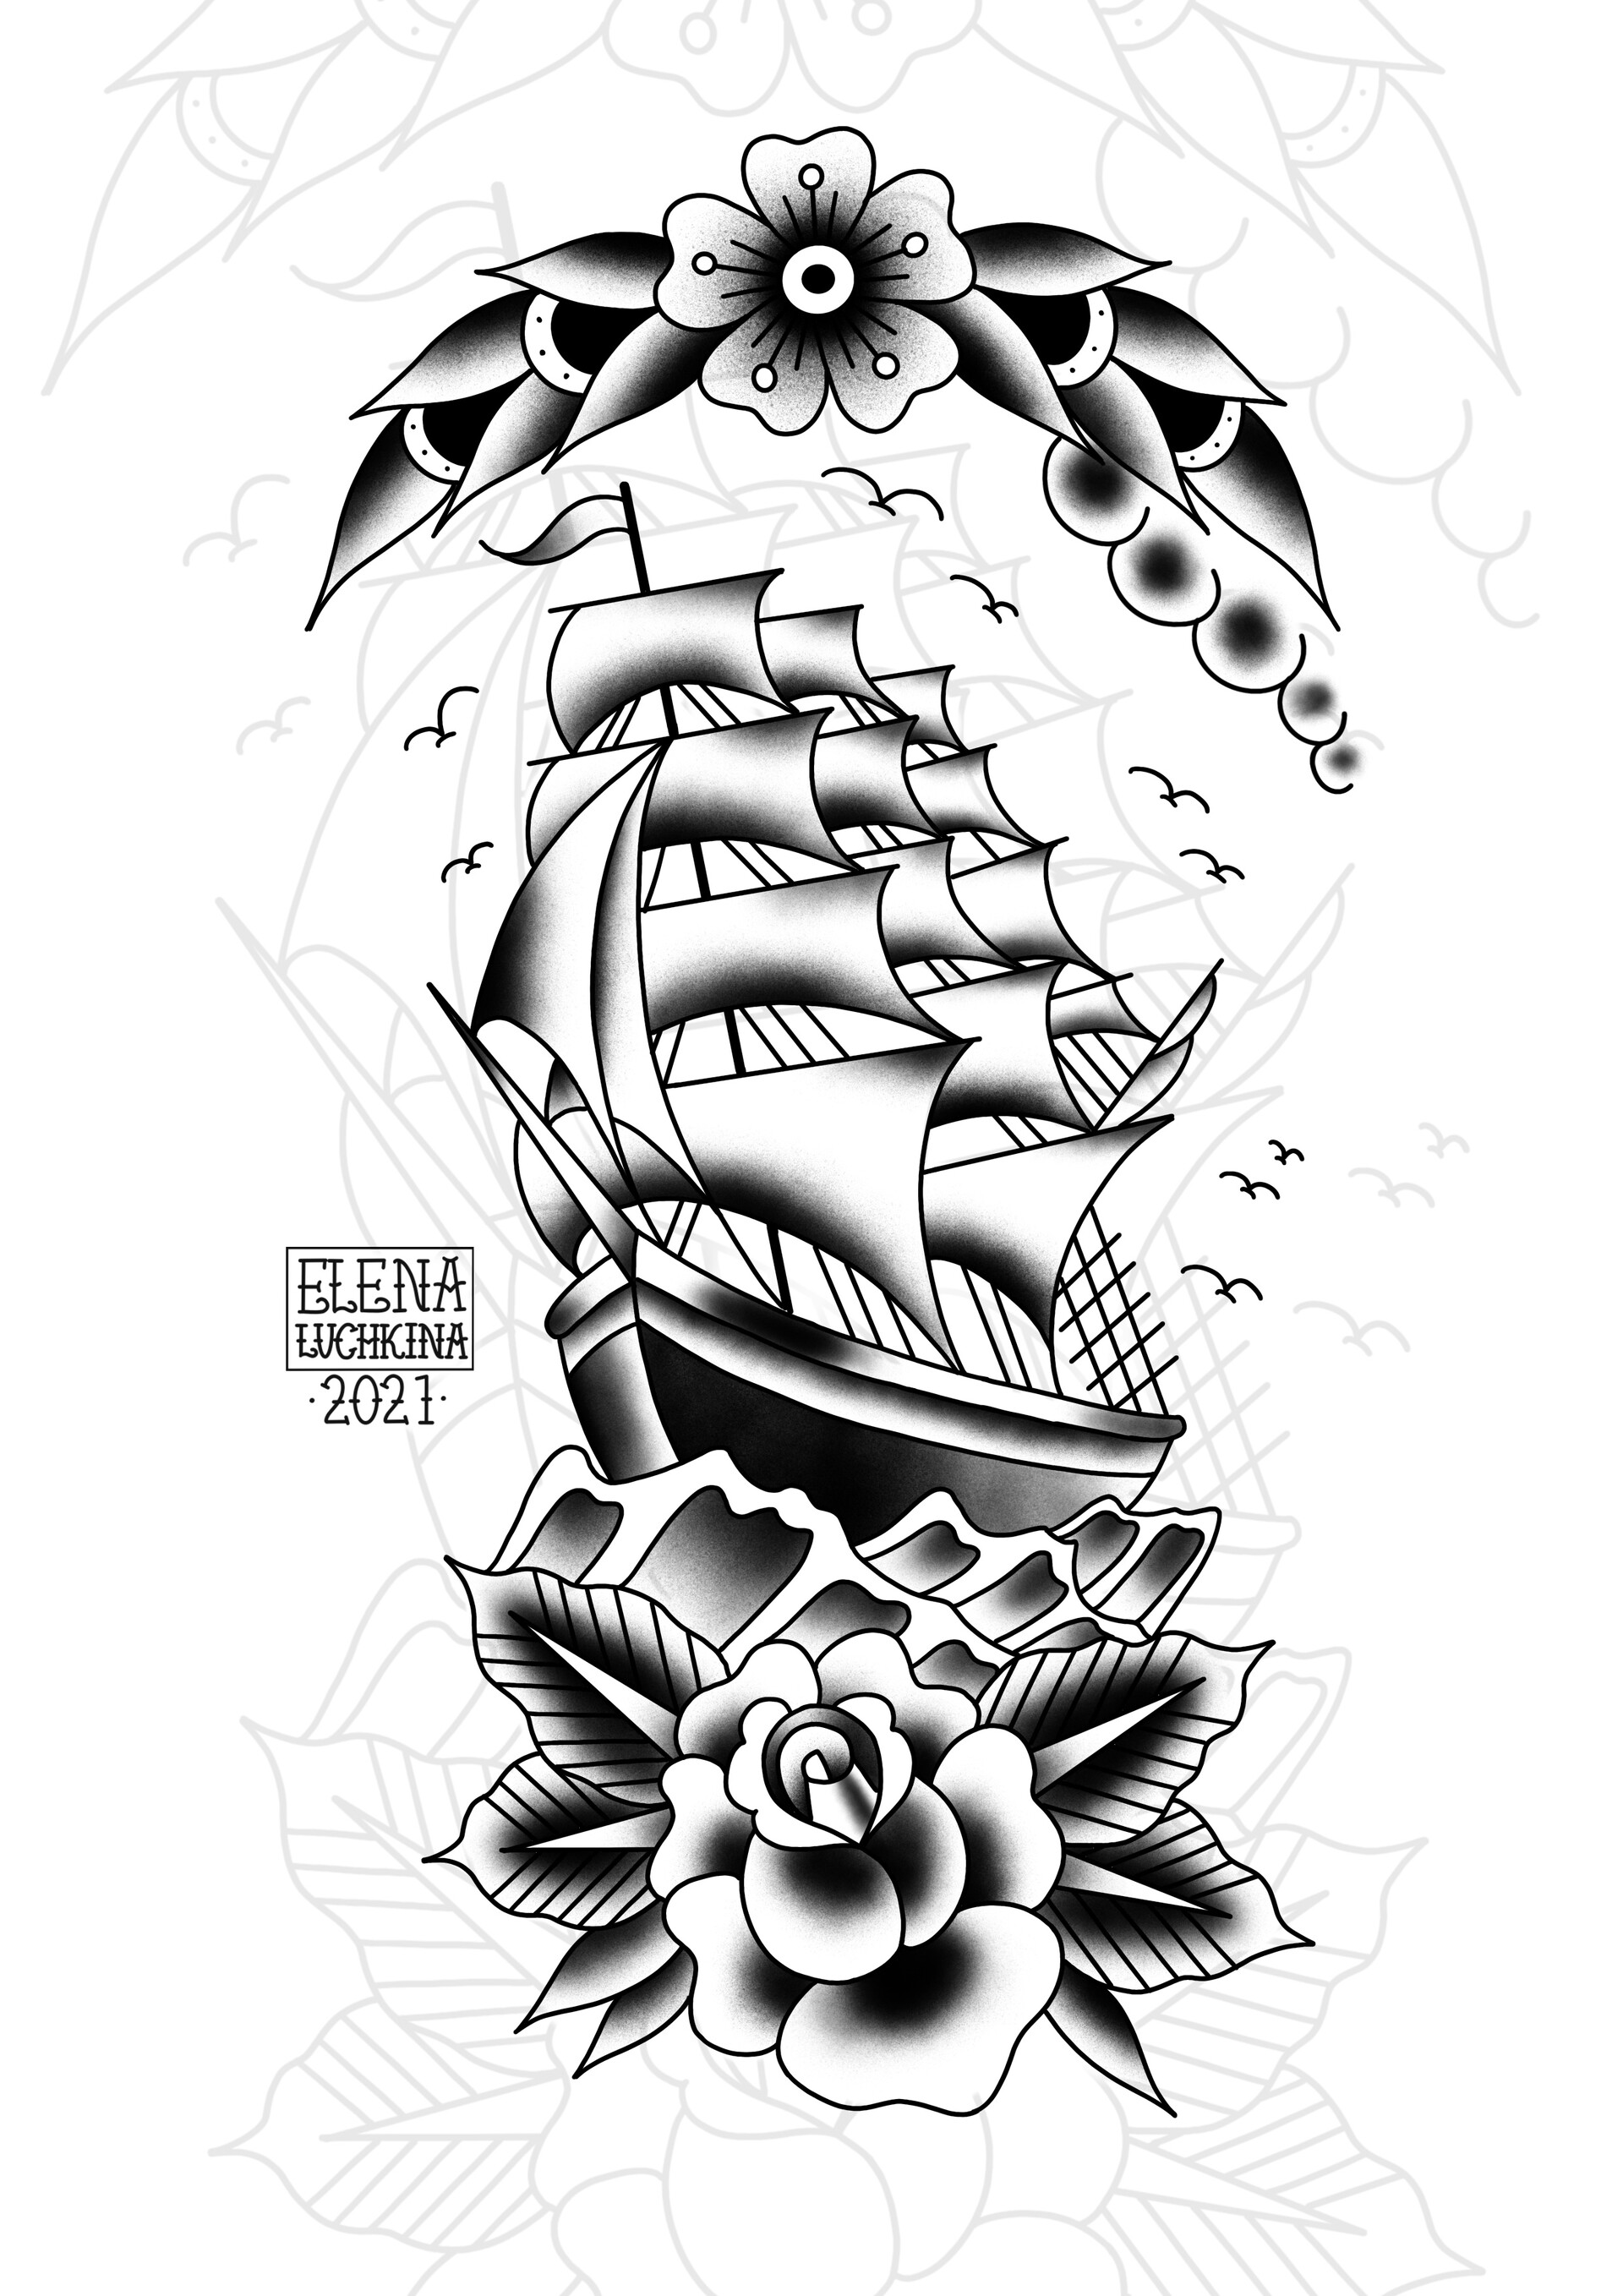 Ship Tattoo Designs